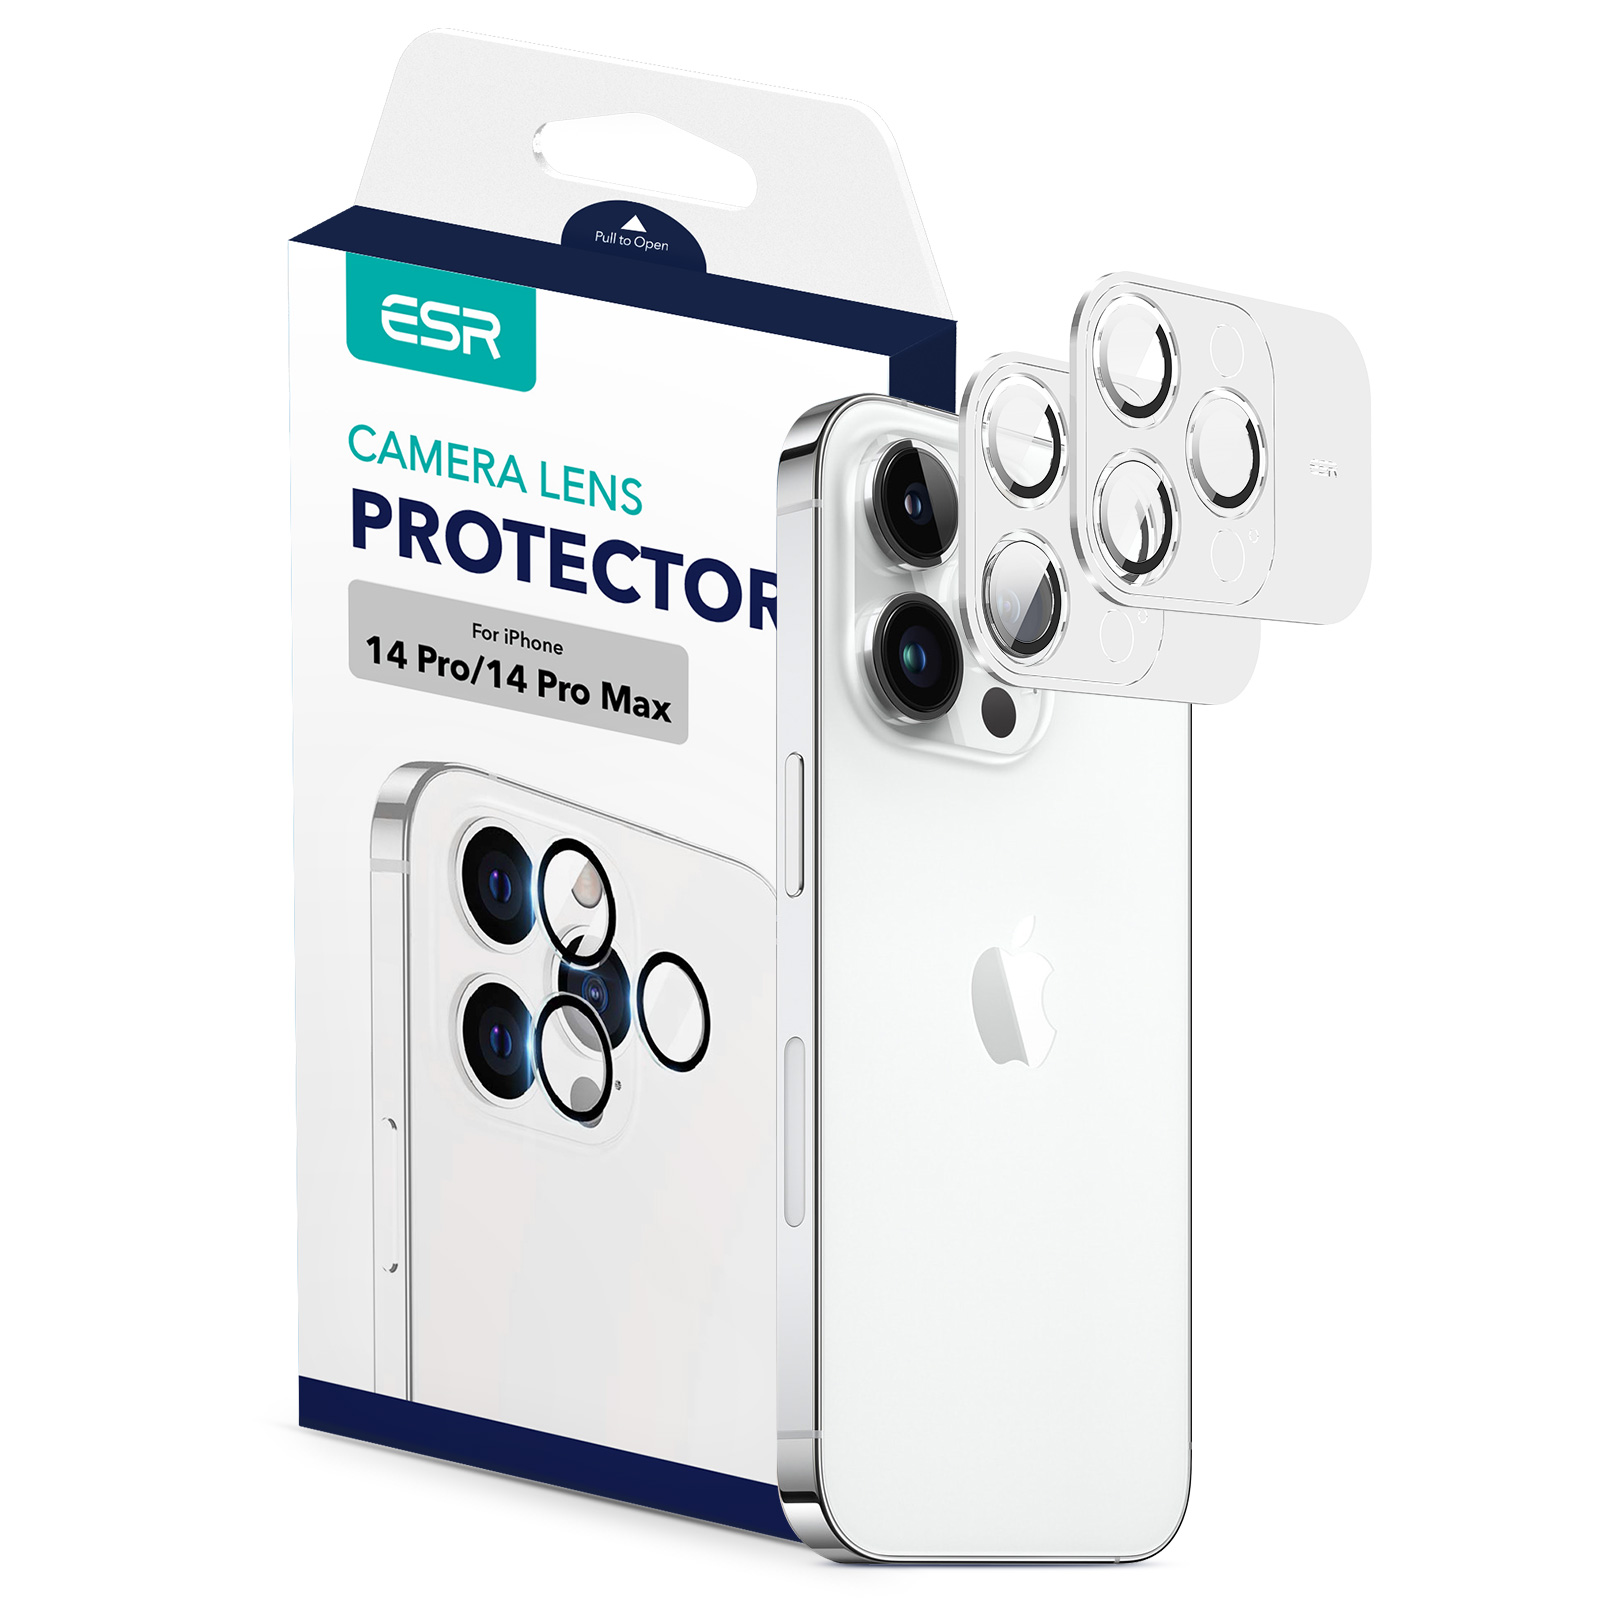 iPhone 14 Pro Max Camera Lens Protector by ESR